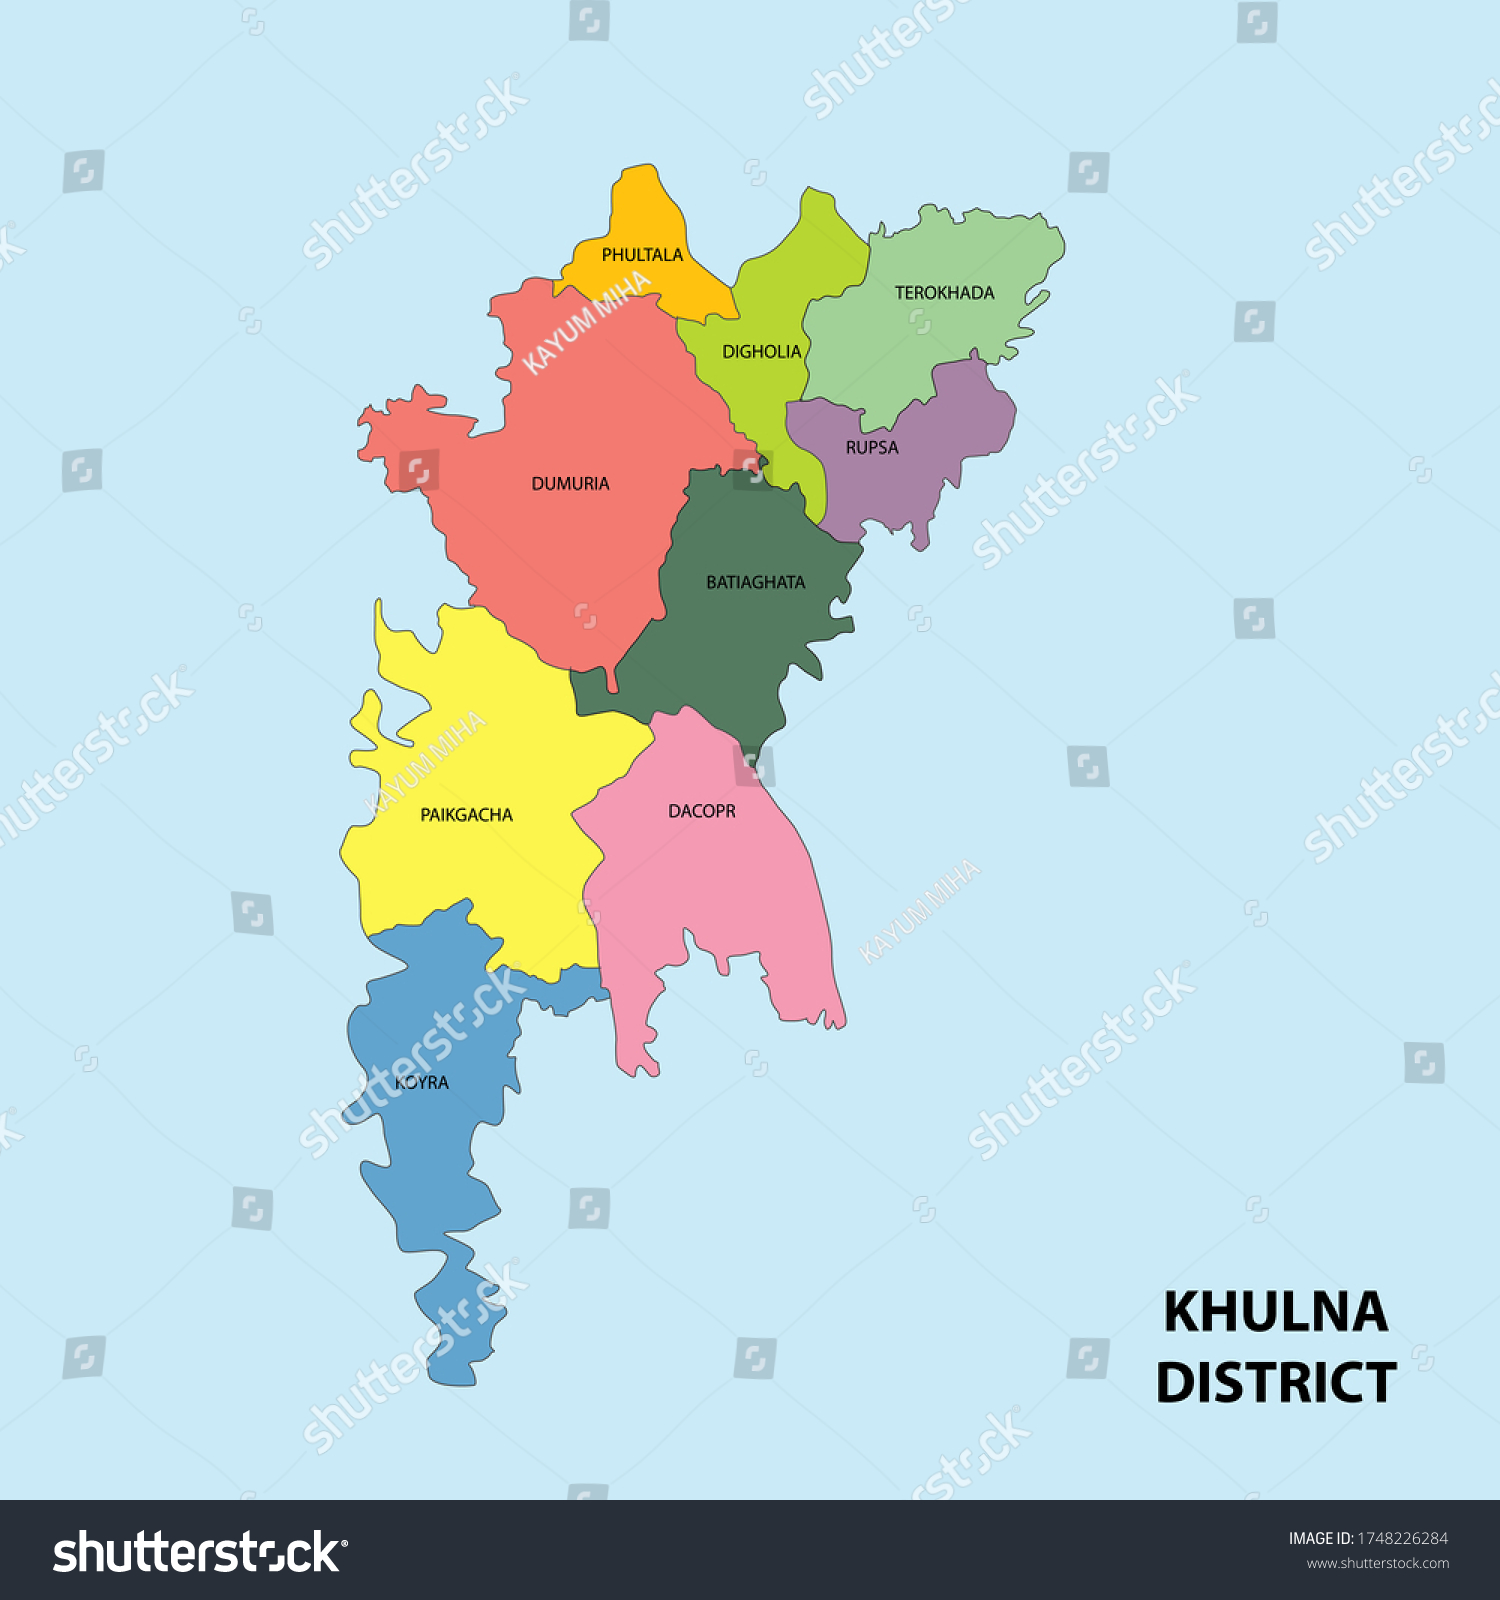 Khulna district map of Bangladesh, Map of Khulna #1748226284